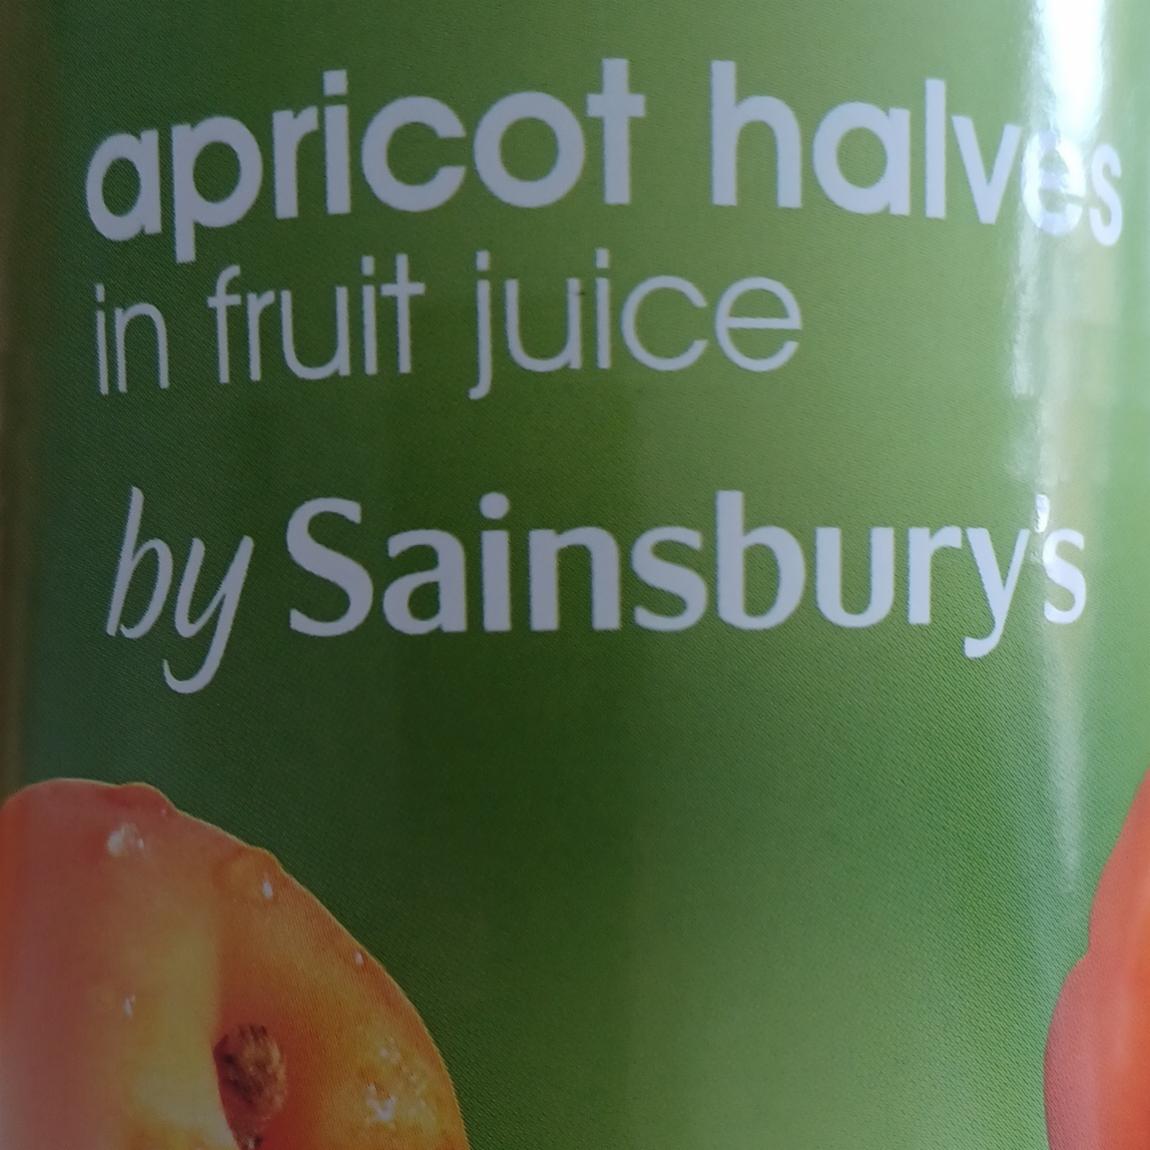 Fotografie - Apricot halves in fruit juice by Sainsbury's